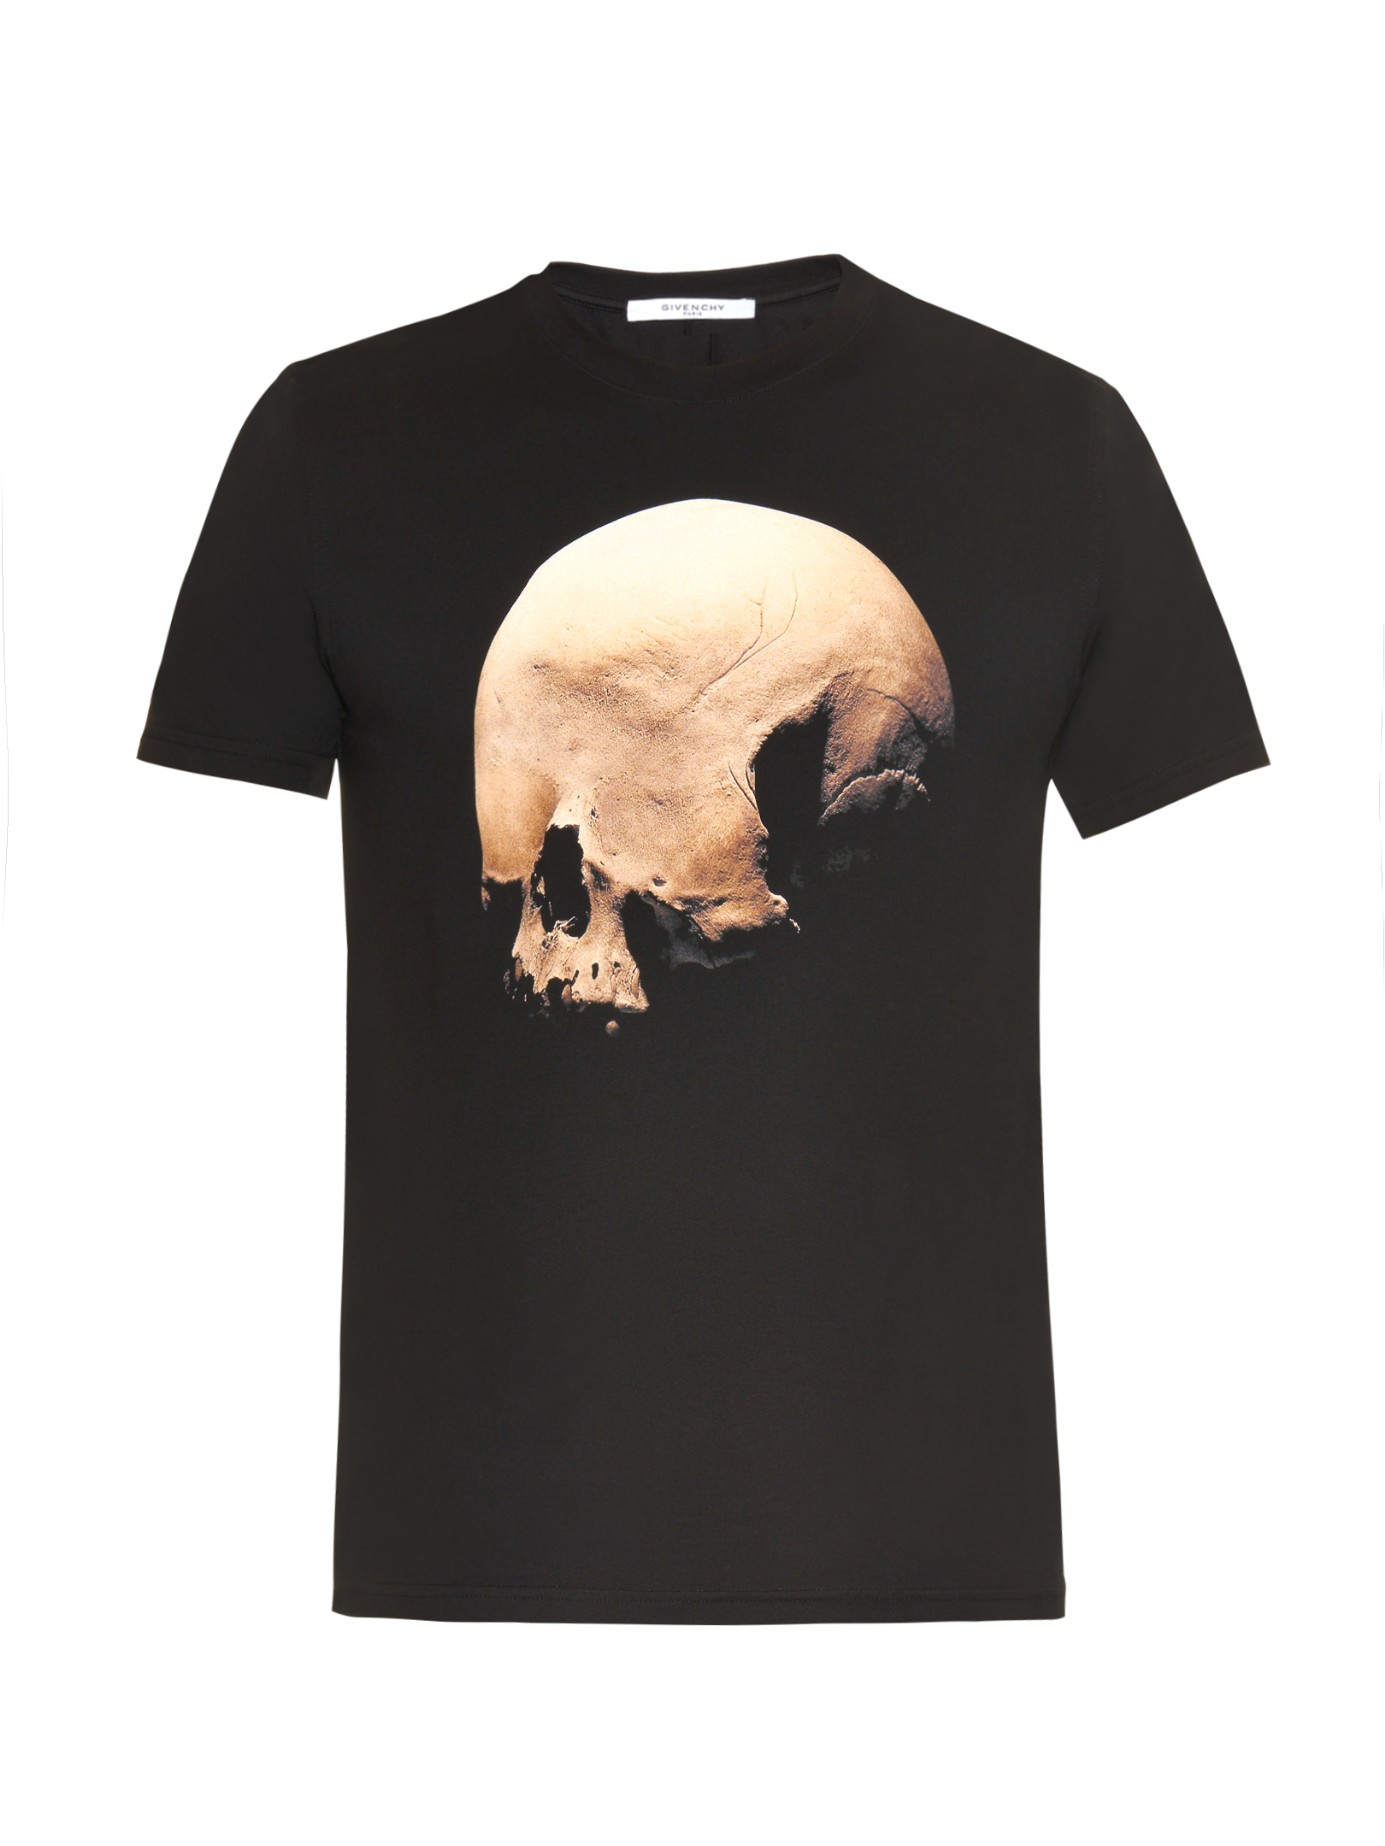 Givenchy Skull Print T-Shirt in Black 